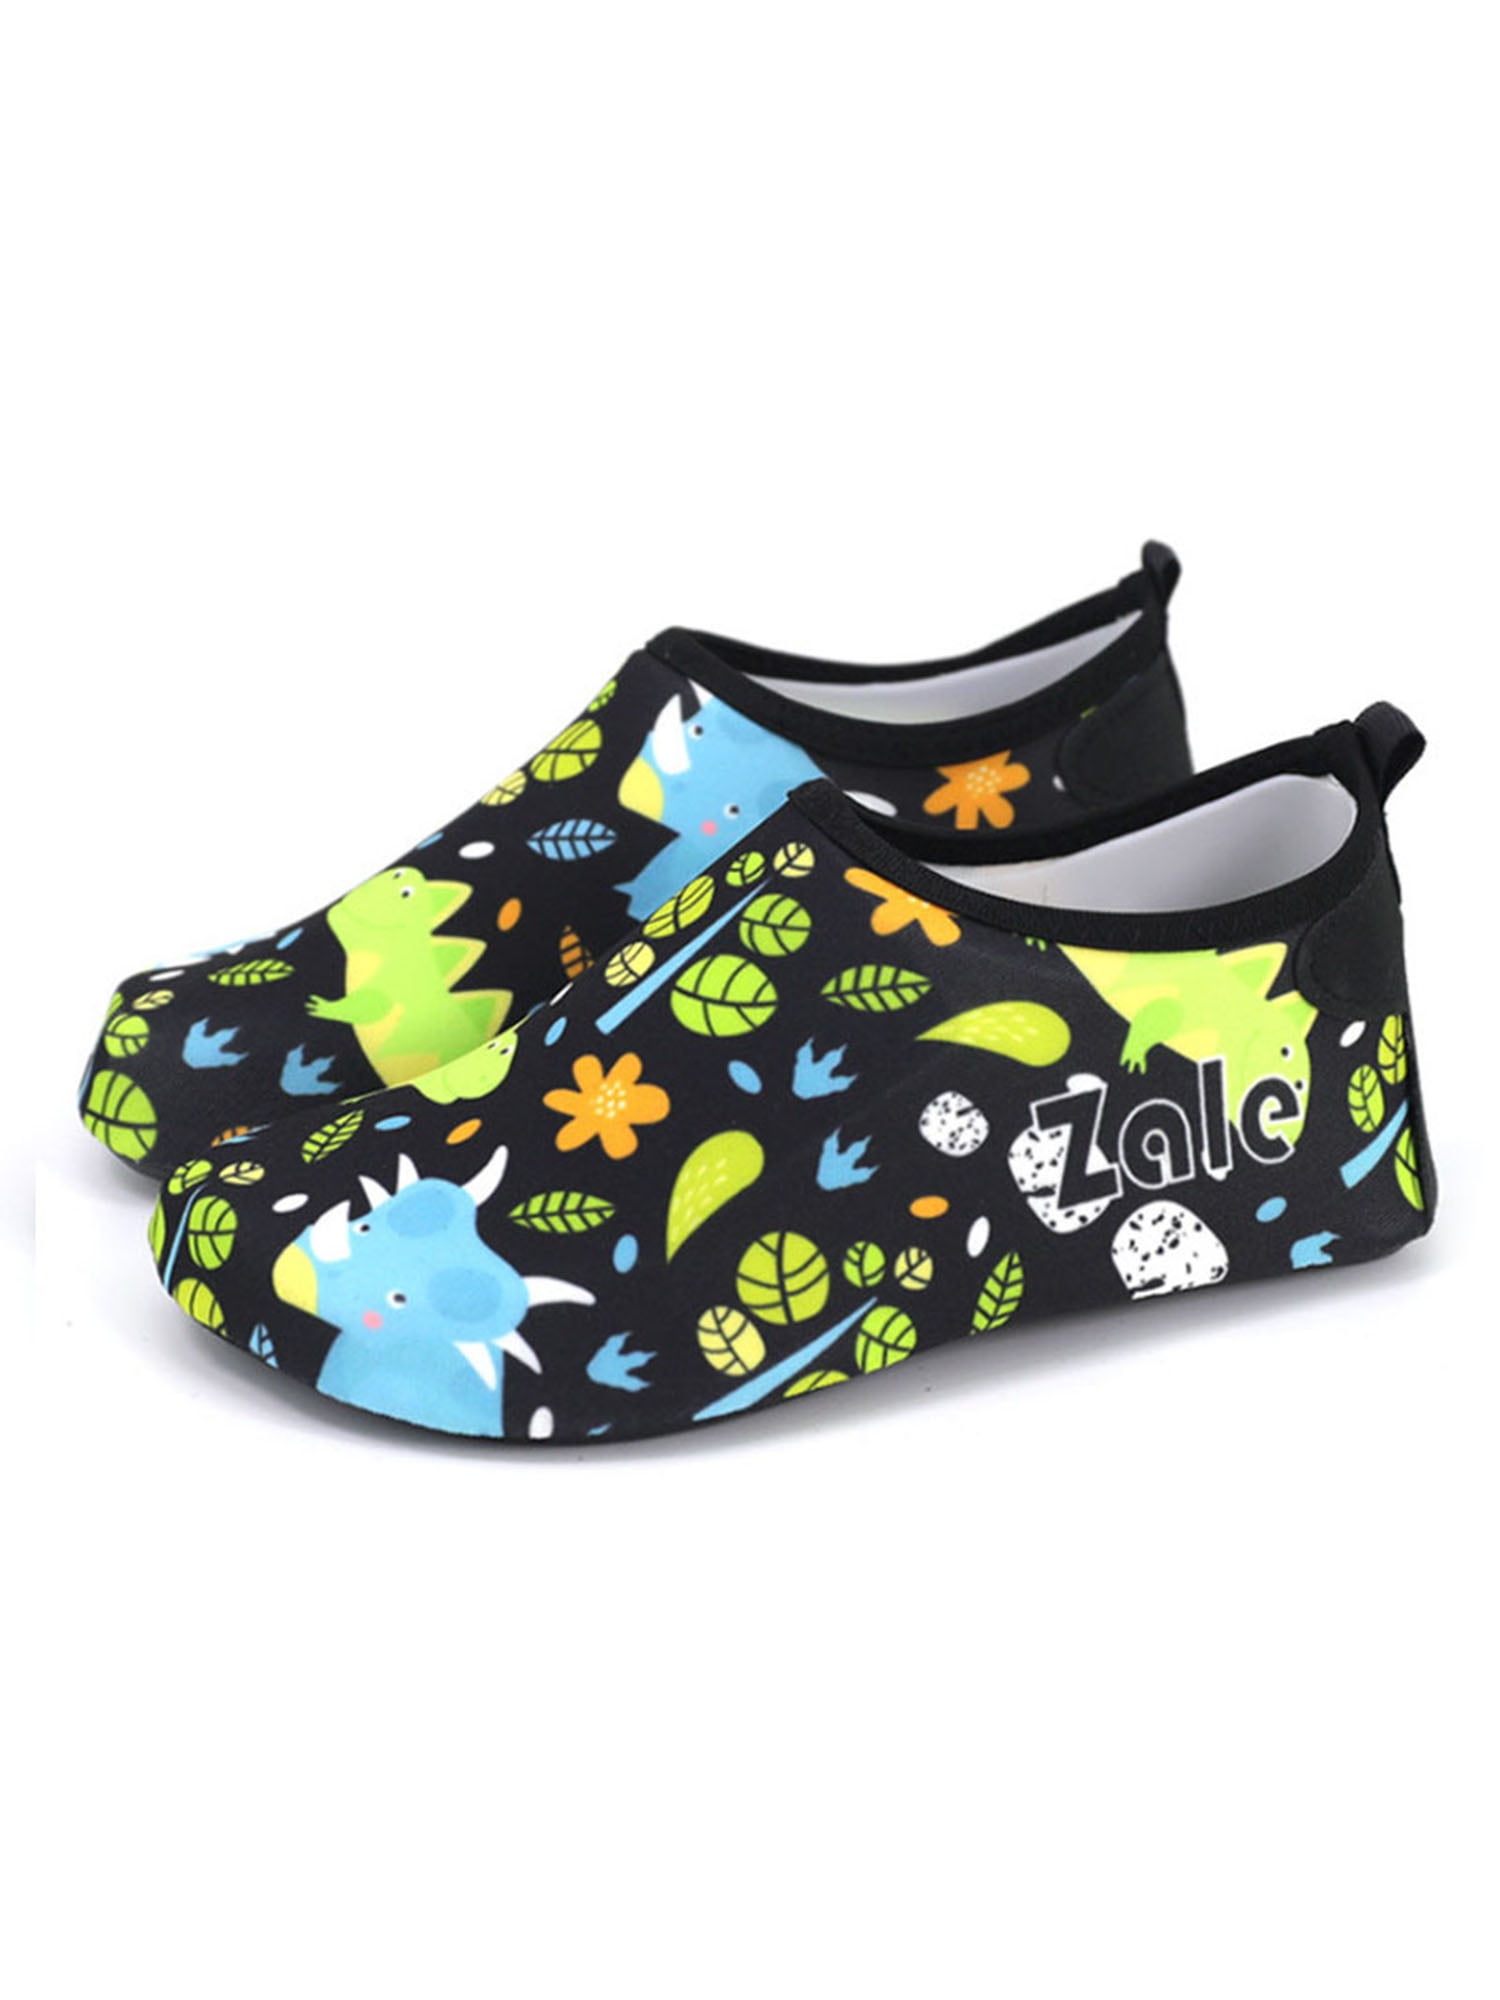 Unisex Child Water Shoes Aqua Socks Diving Shoes Wetsuit Non-slip Beach Sea Swim 